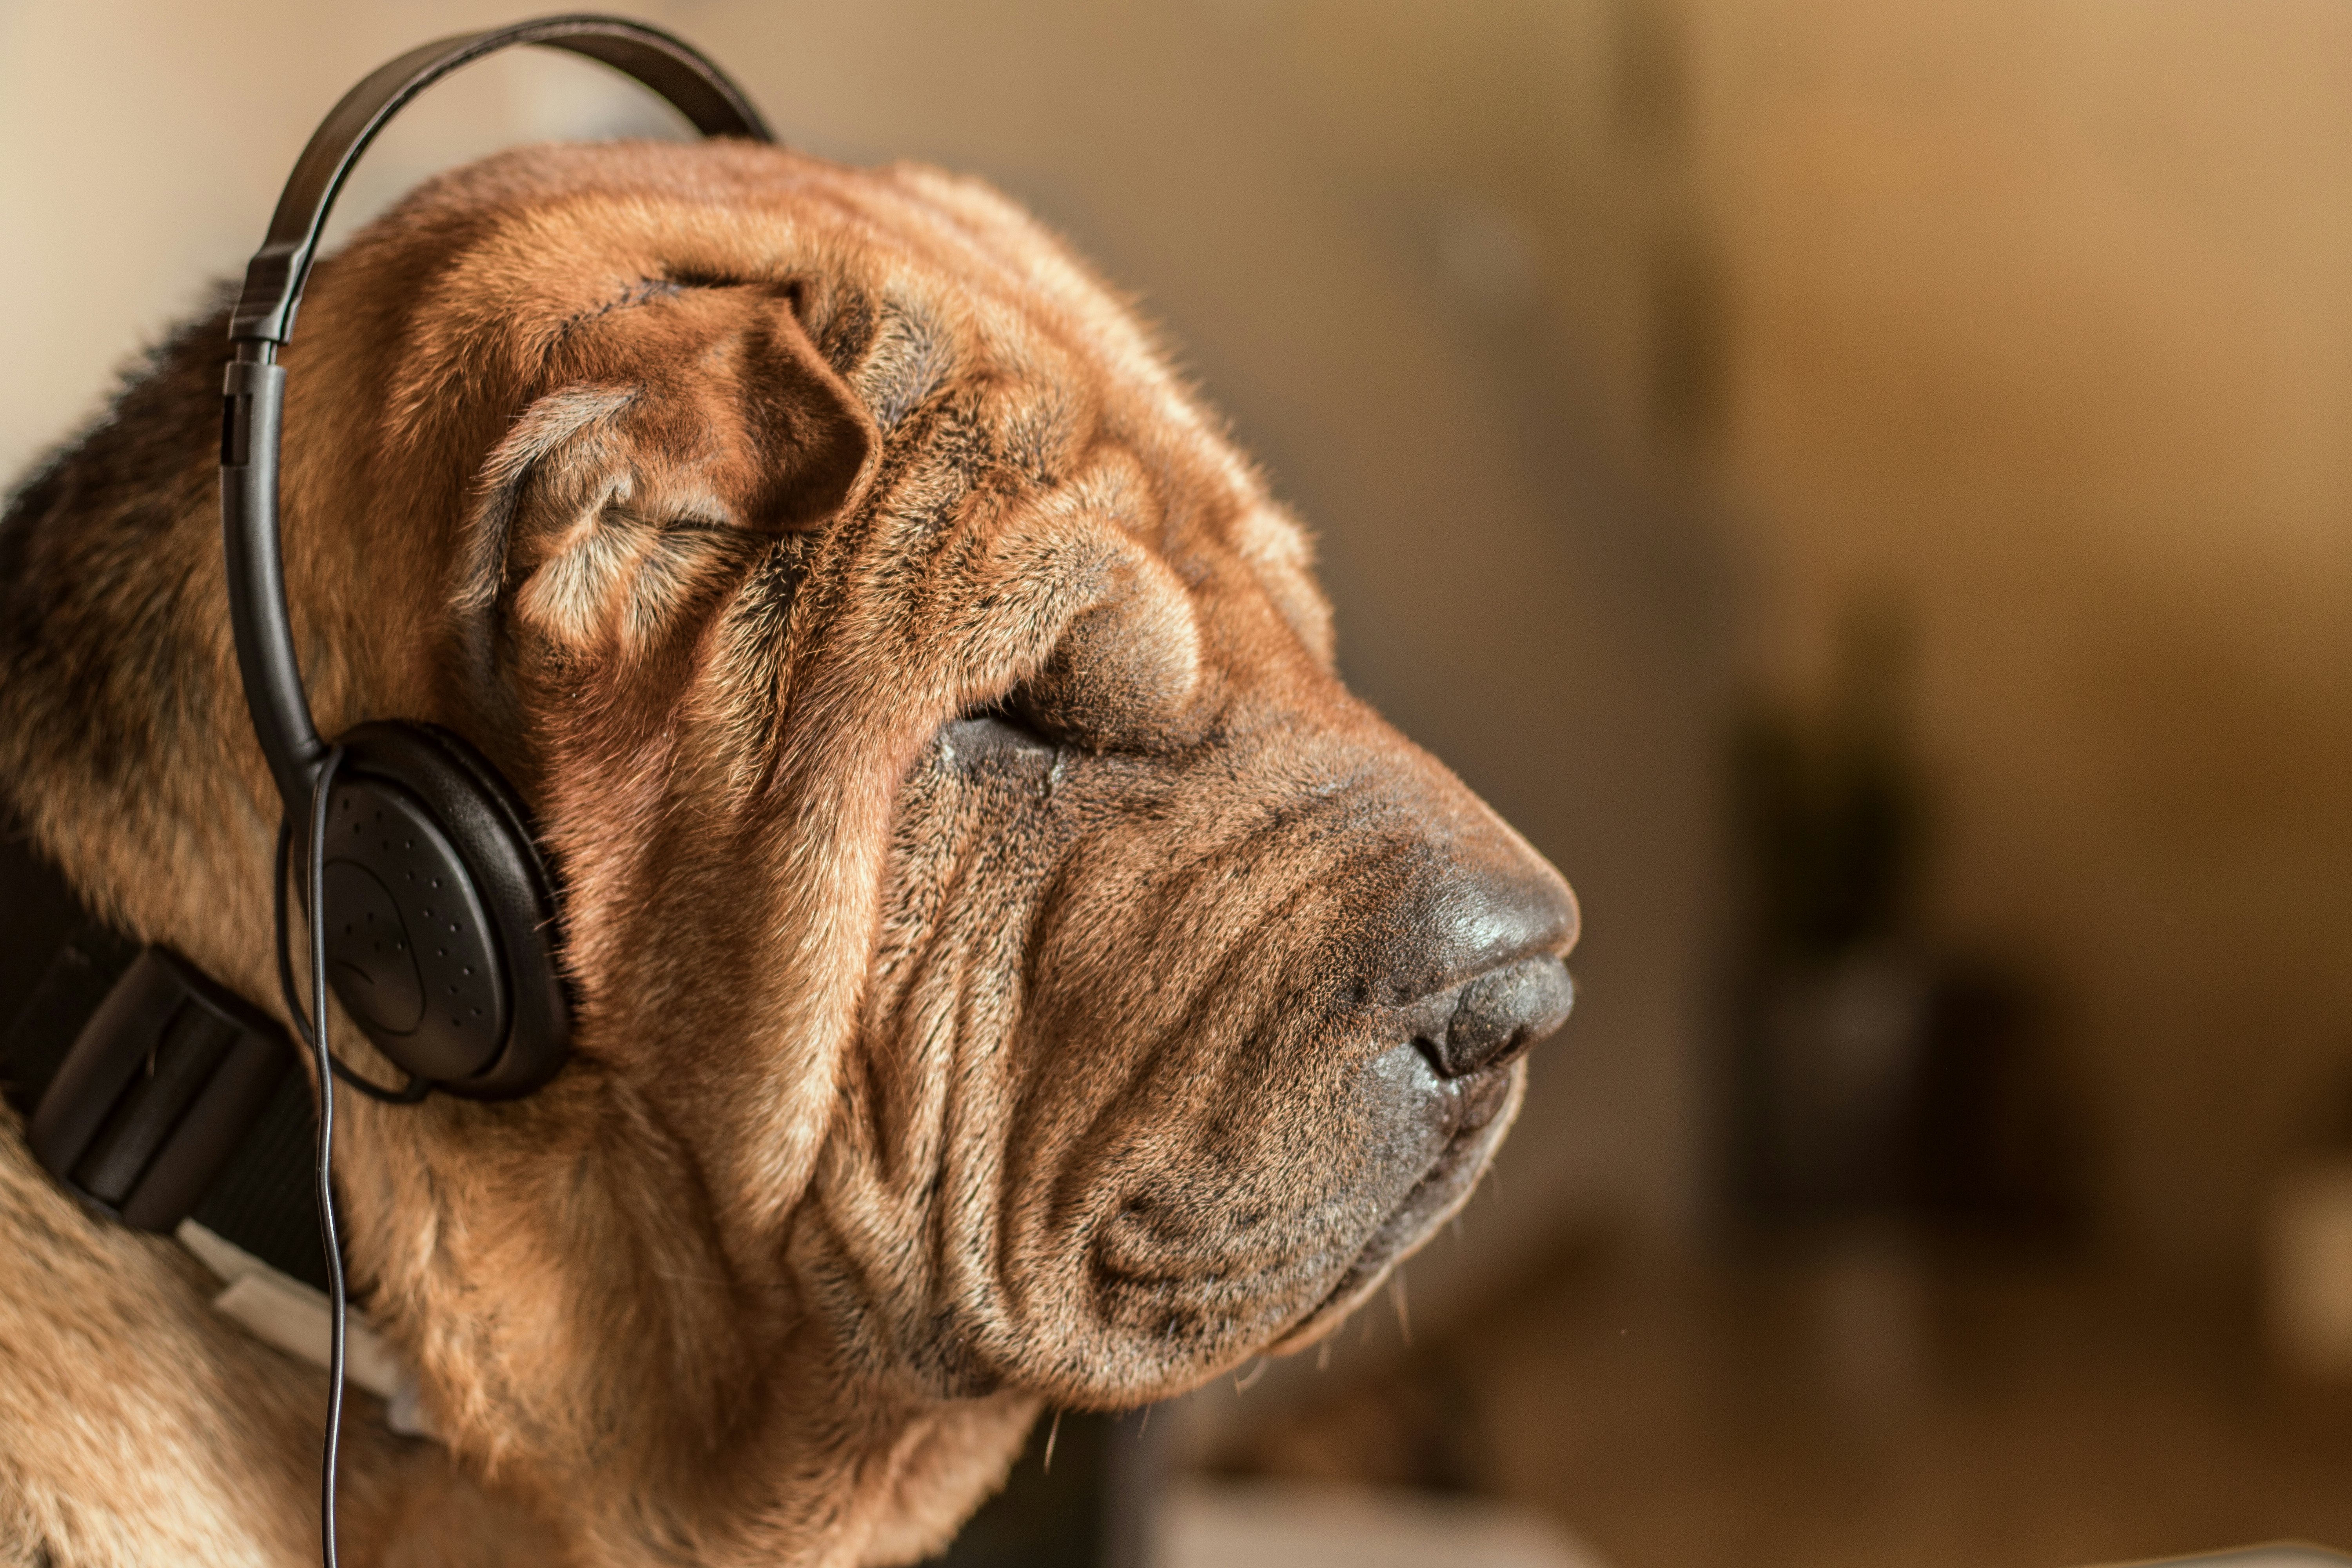 music to make dogs go to sleep